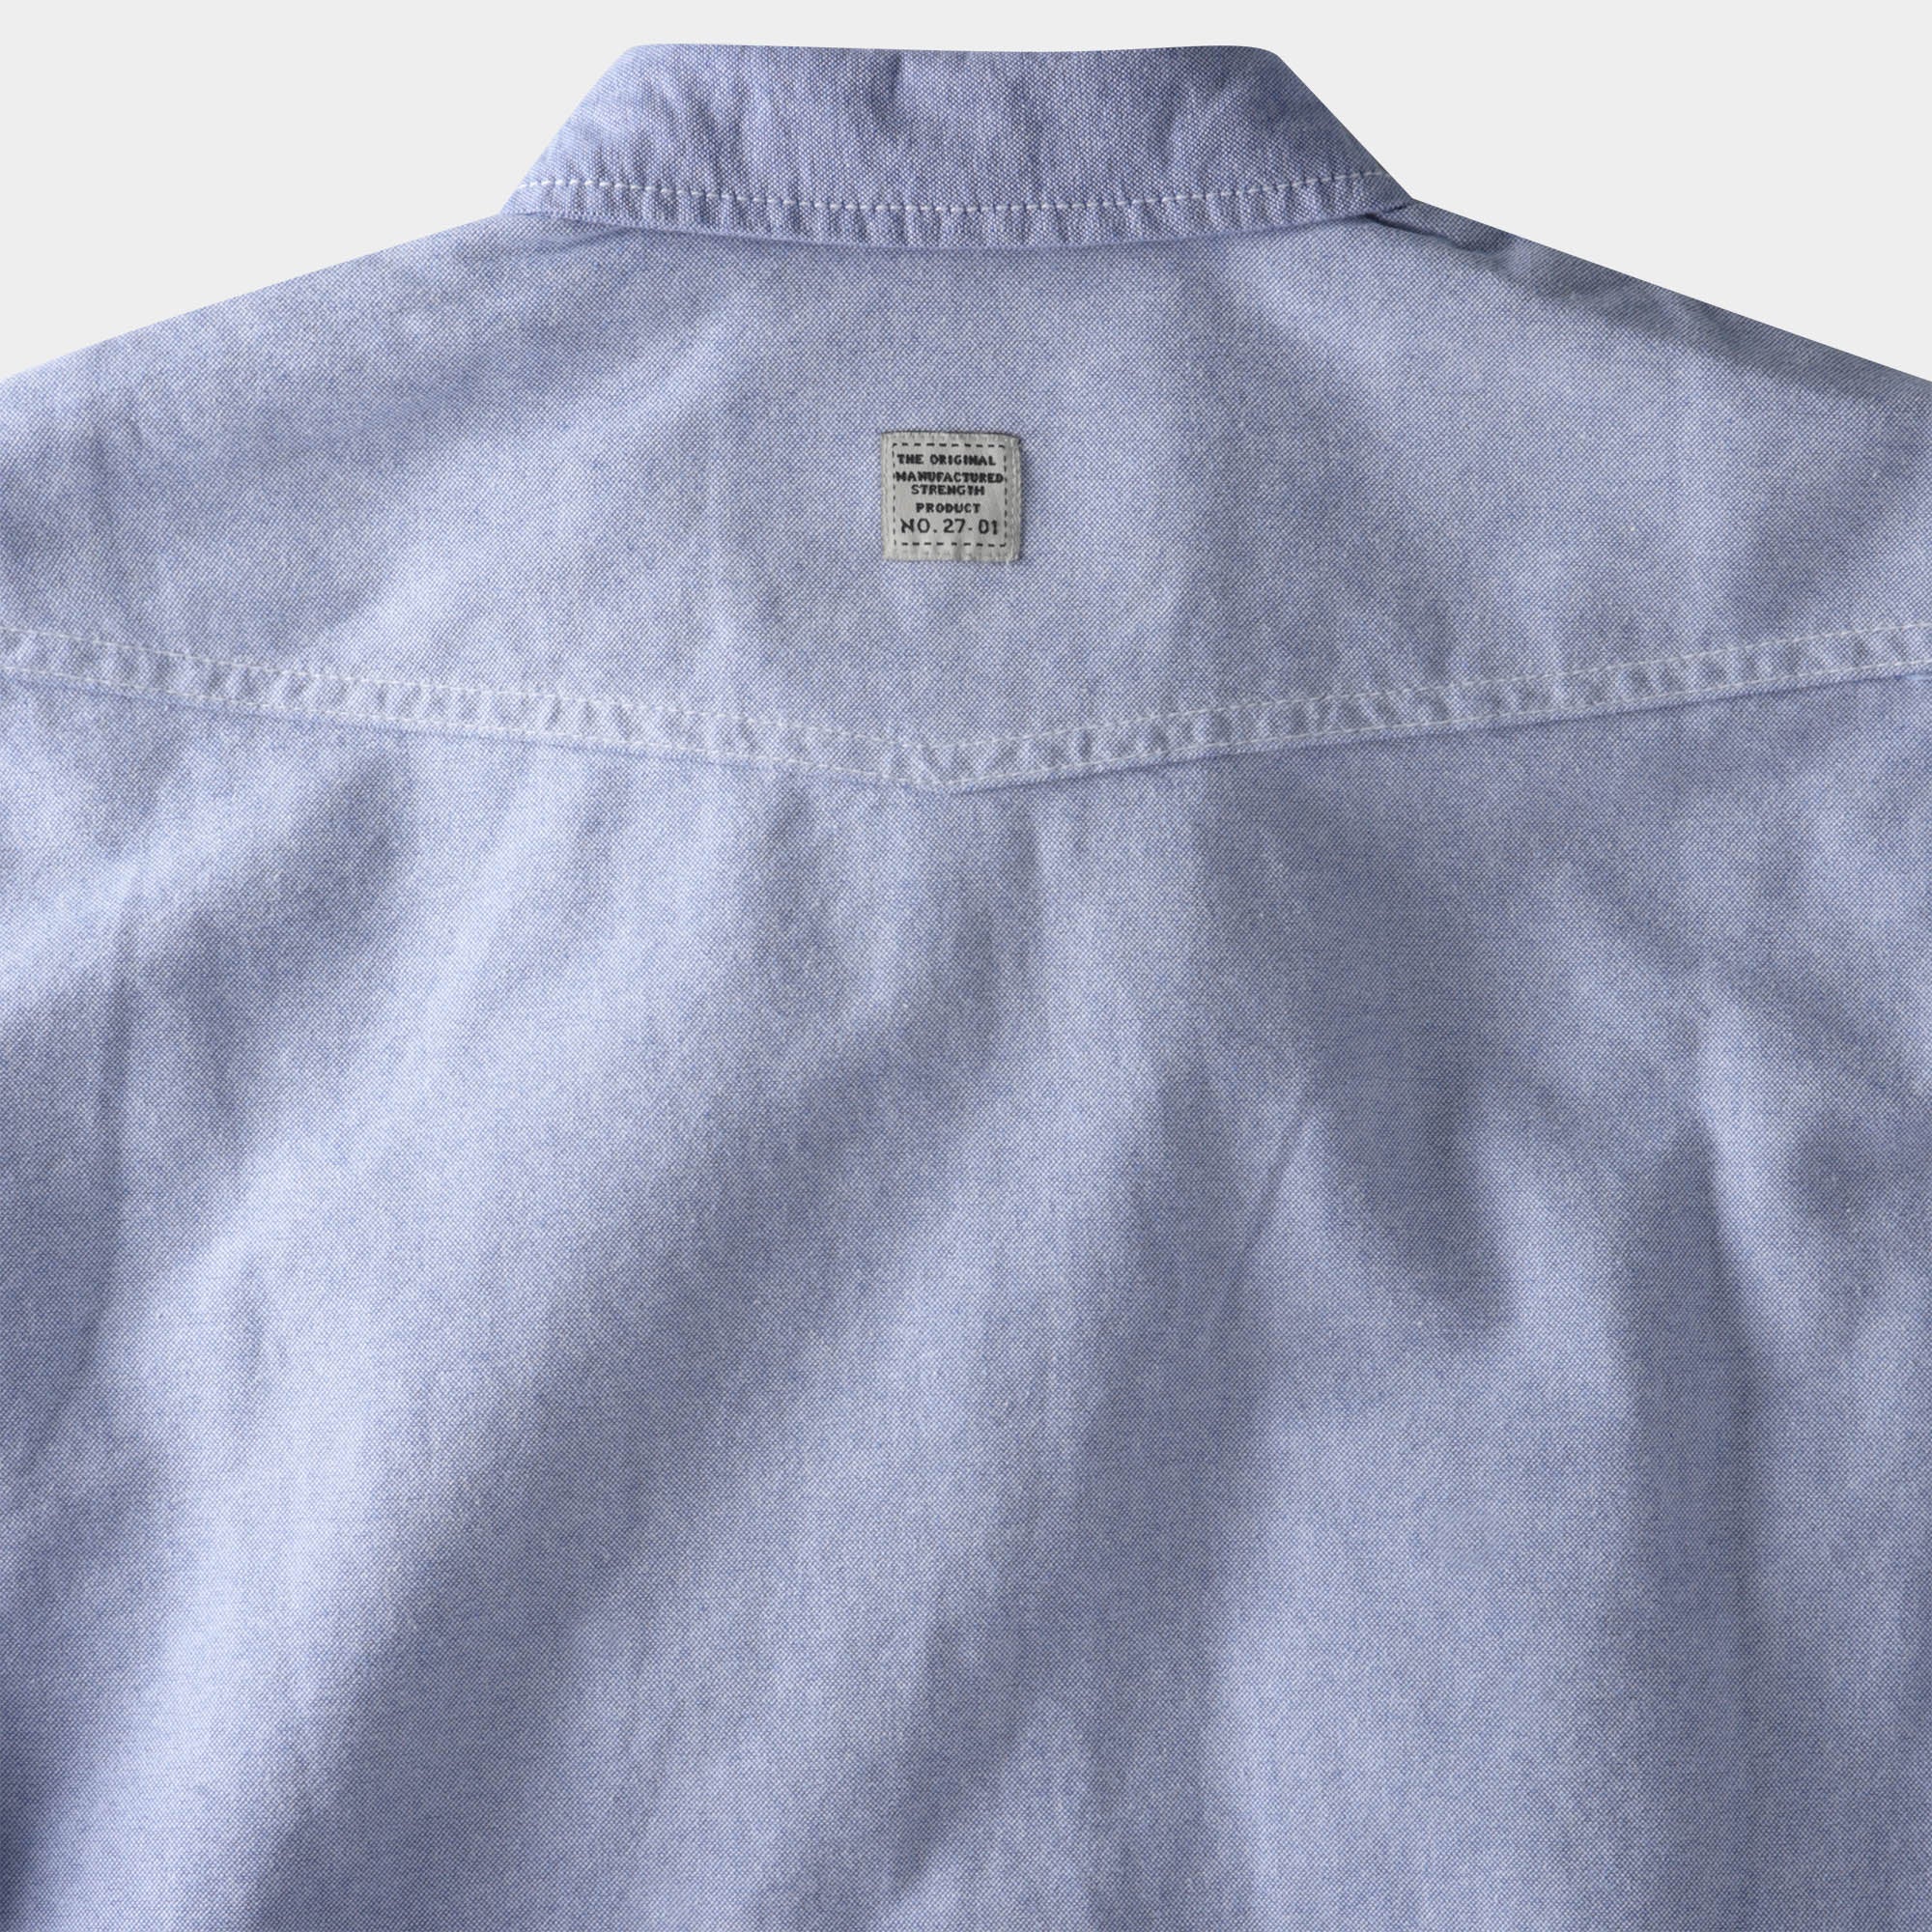 denim shirt_denim shirt men_jeans shirt_denim button up_boys denim shirt_mens denim shirts long sleeve_denim long sleeve shirt_Blue